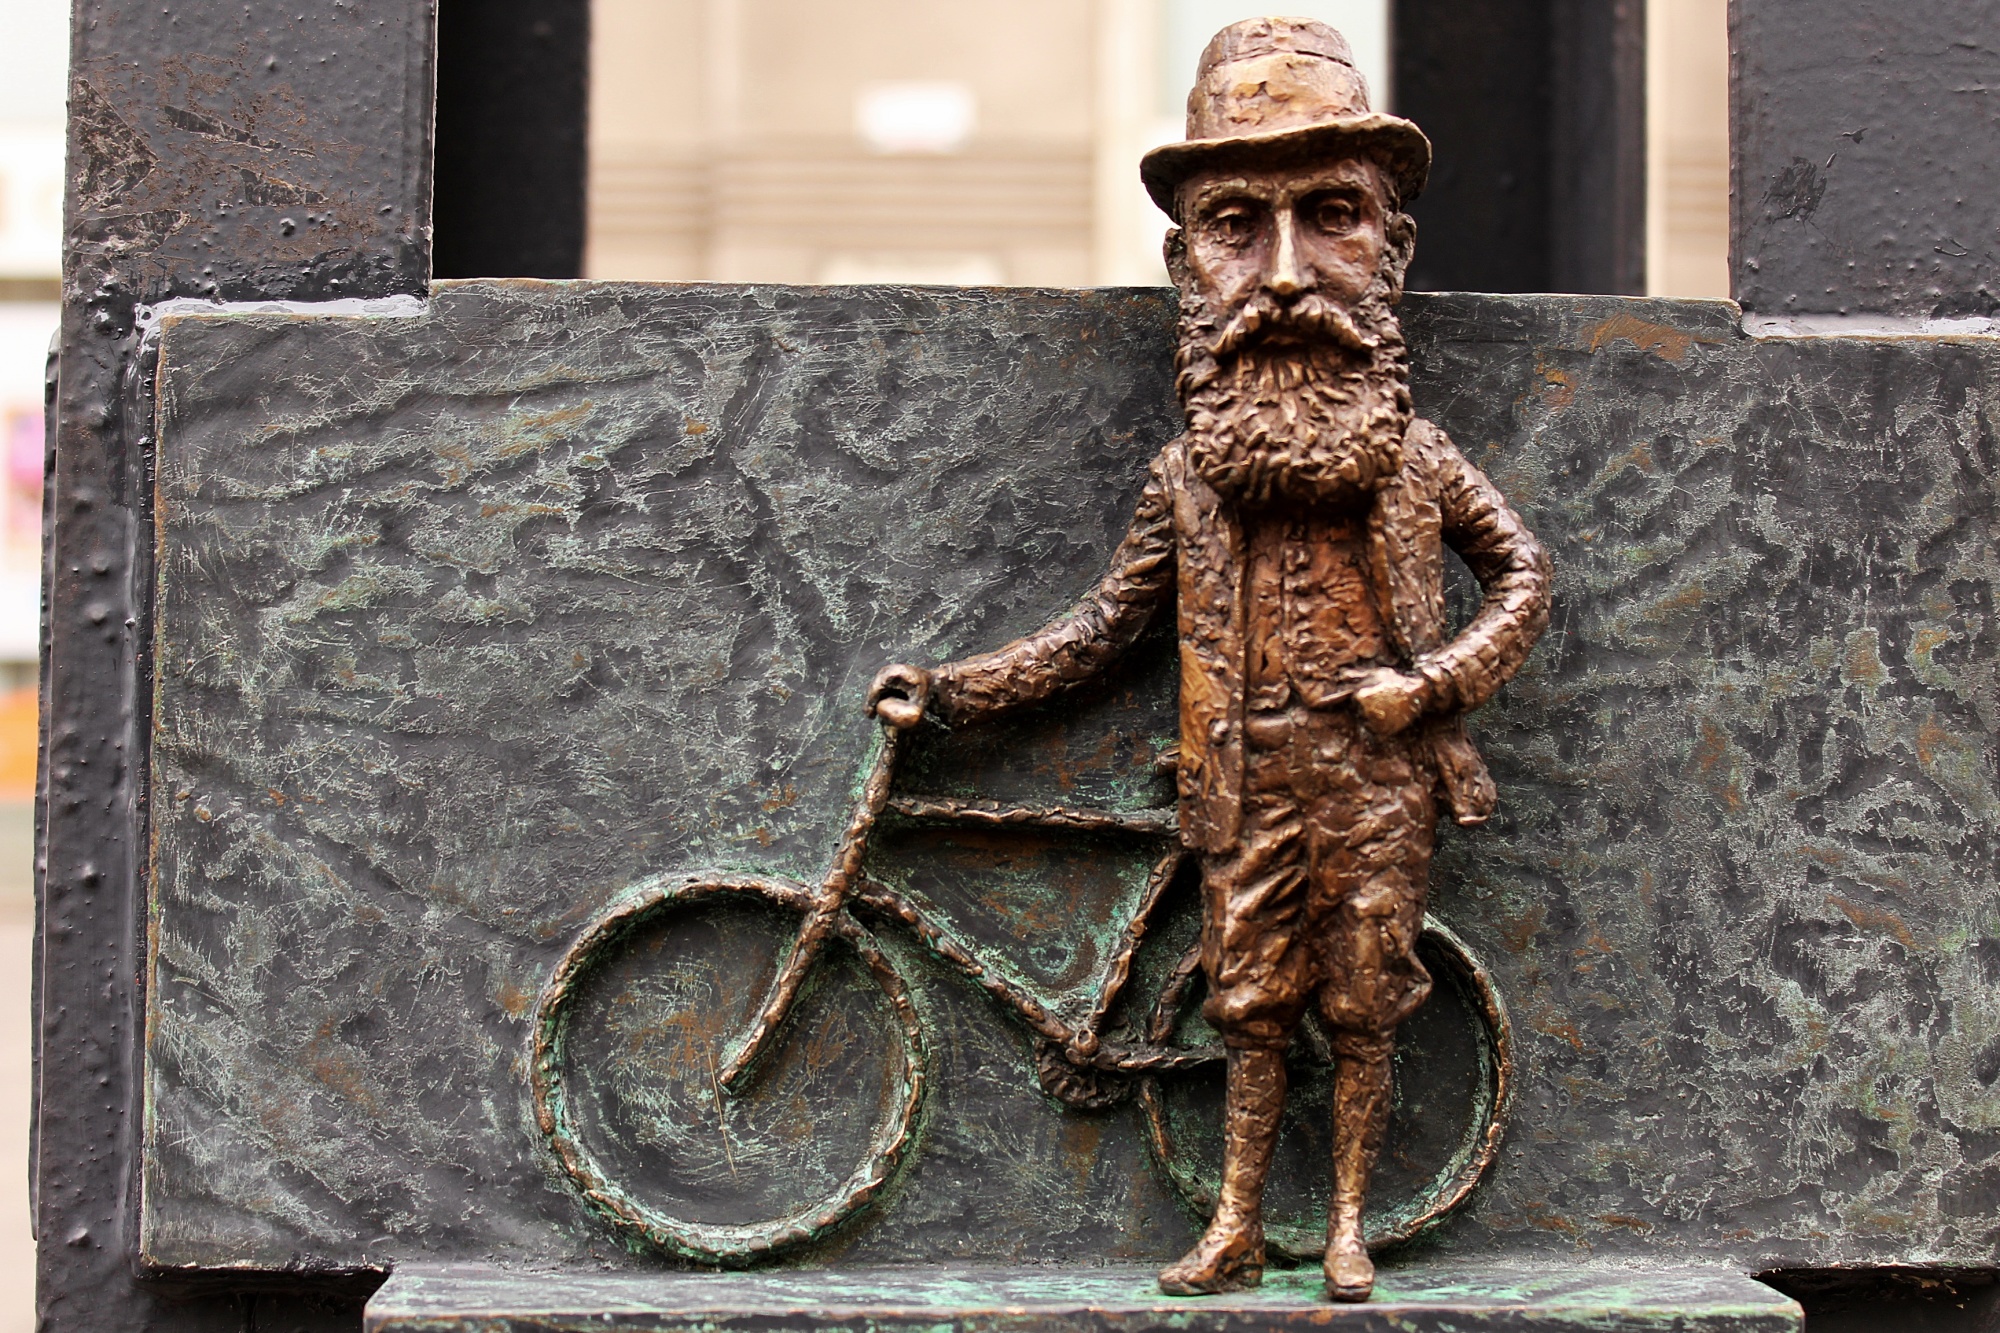 Insider’s Guide: Kolodko's Strange Small Statues Around Budapest